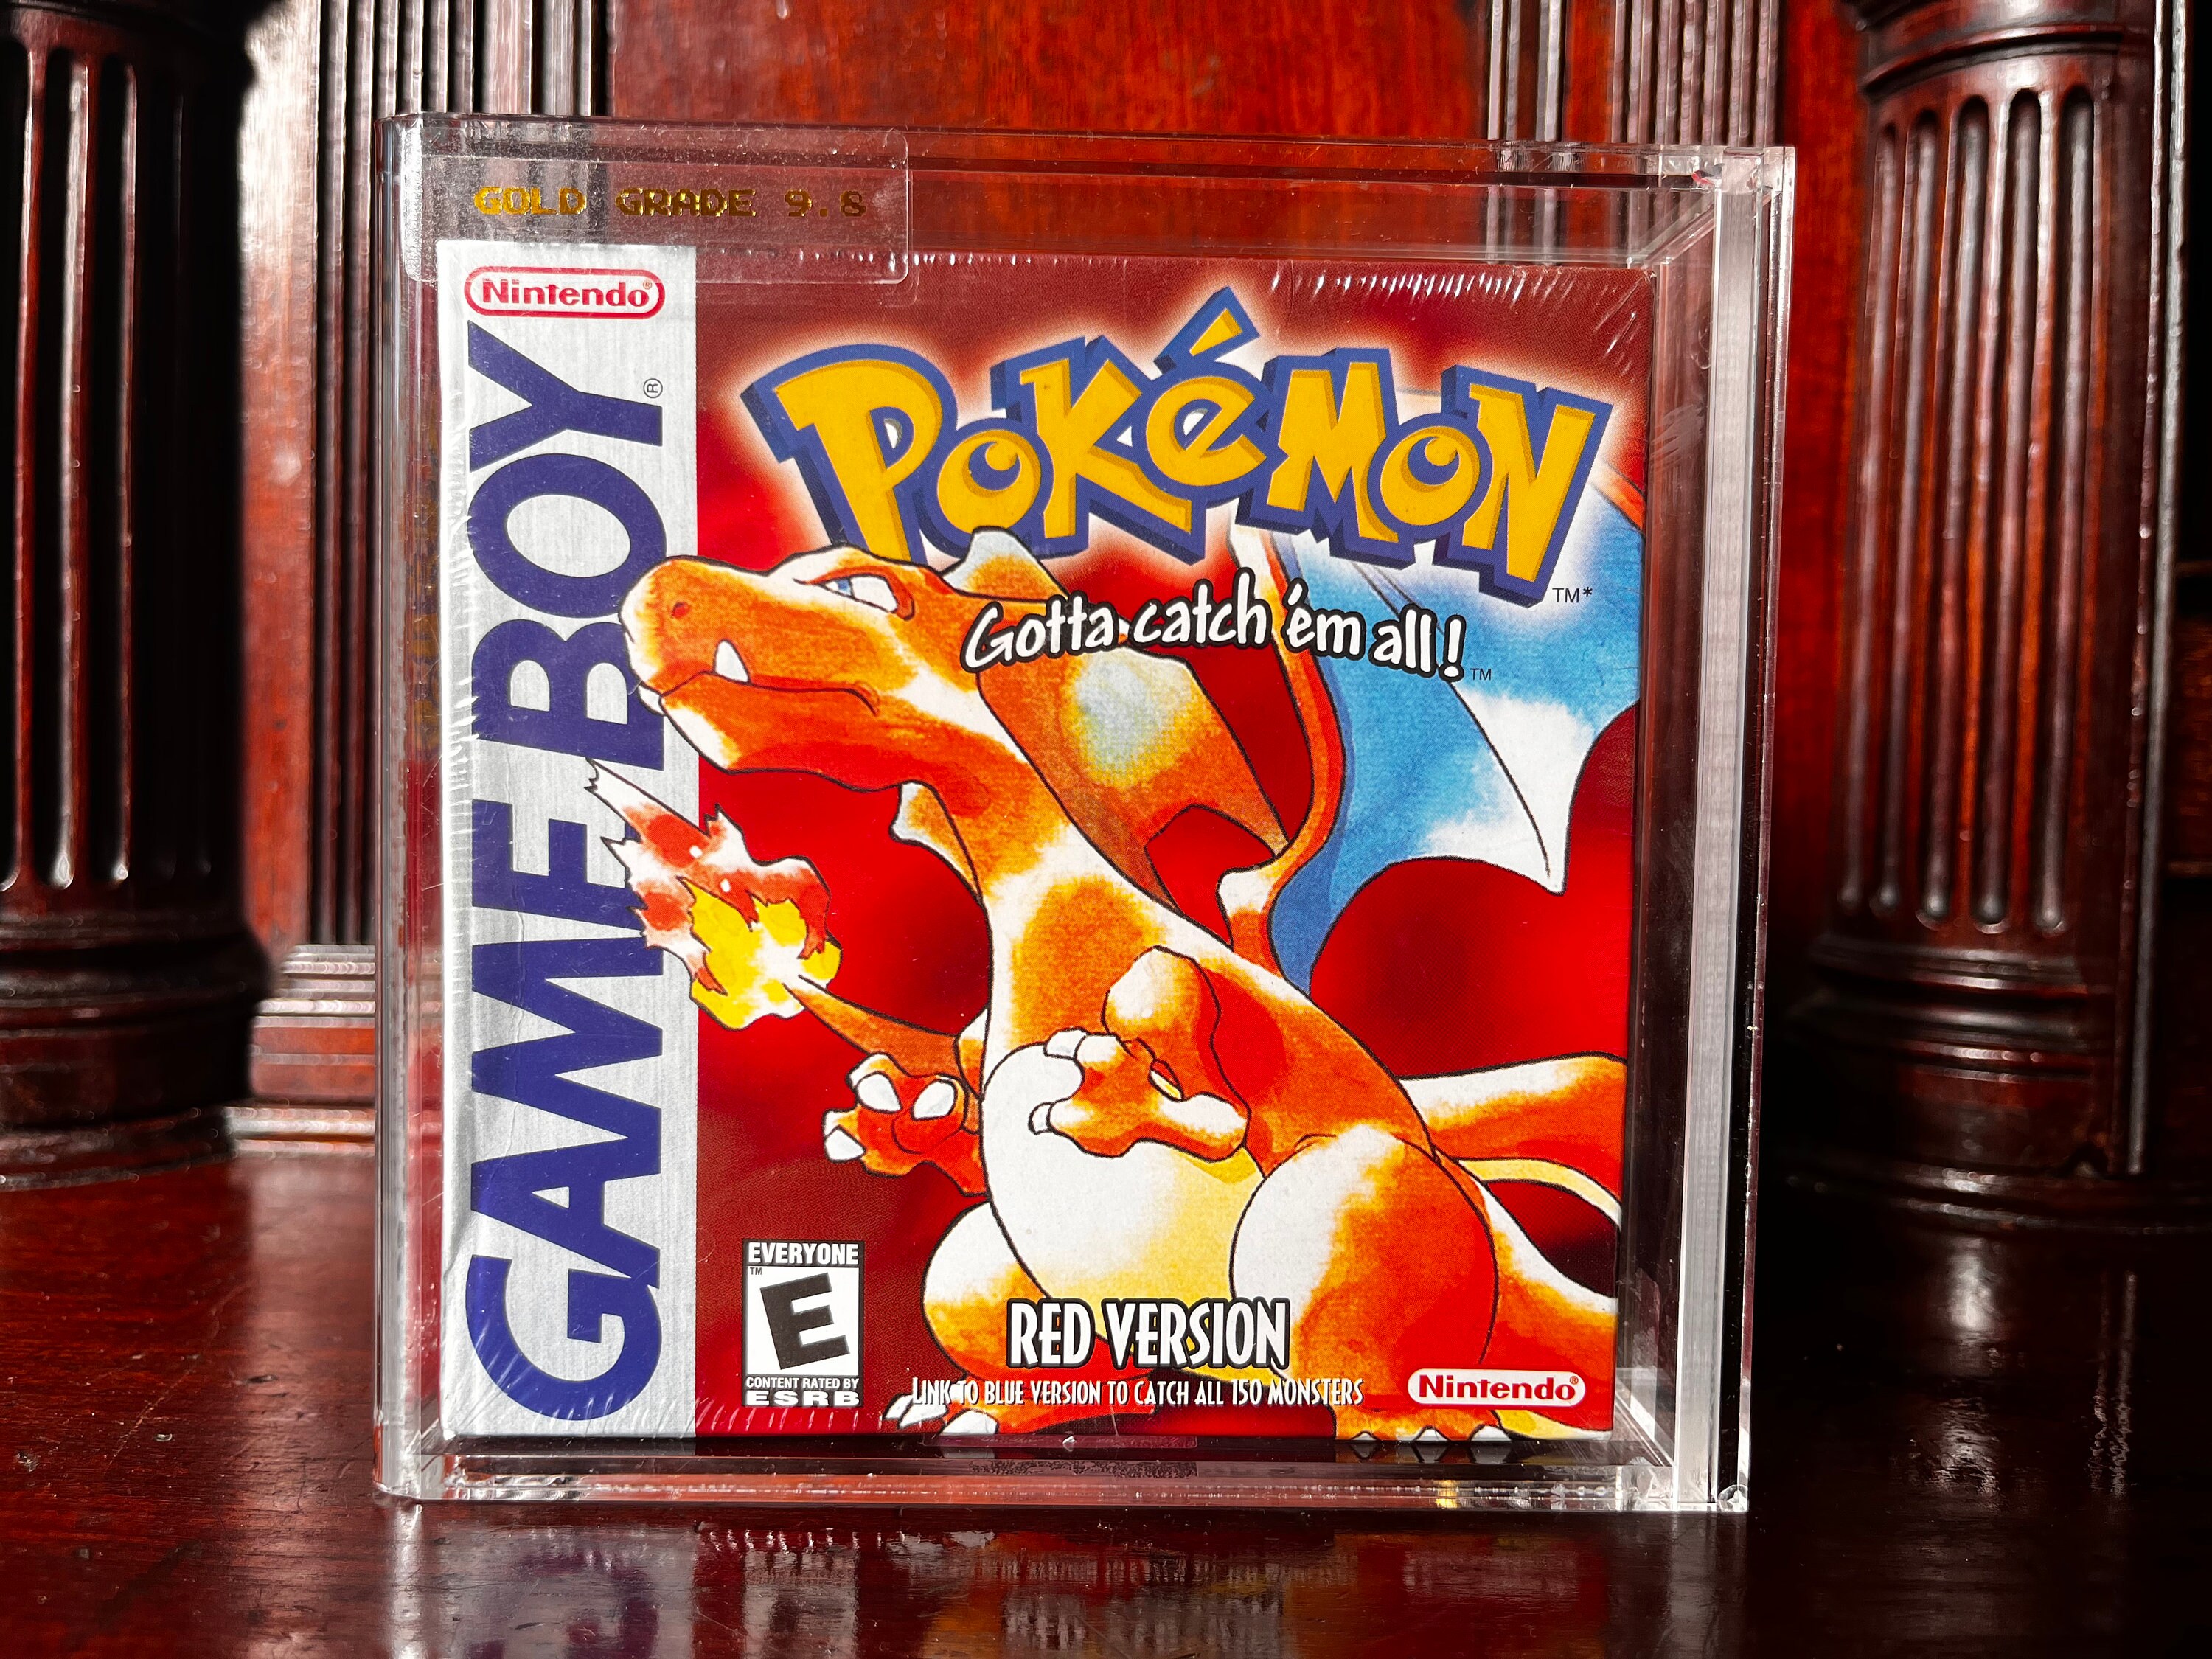 Pokemon Emerald - Gameboy Advance - VGA 80+ - NM - Brand New - Nintendo